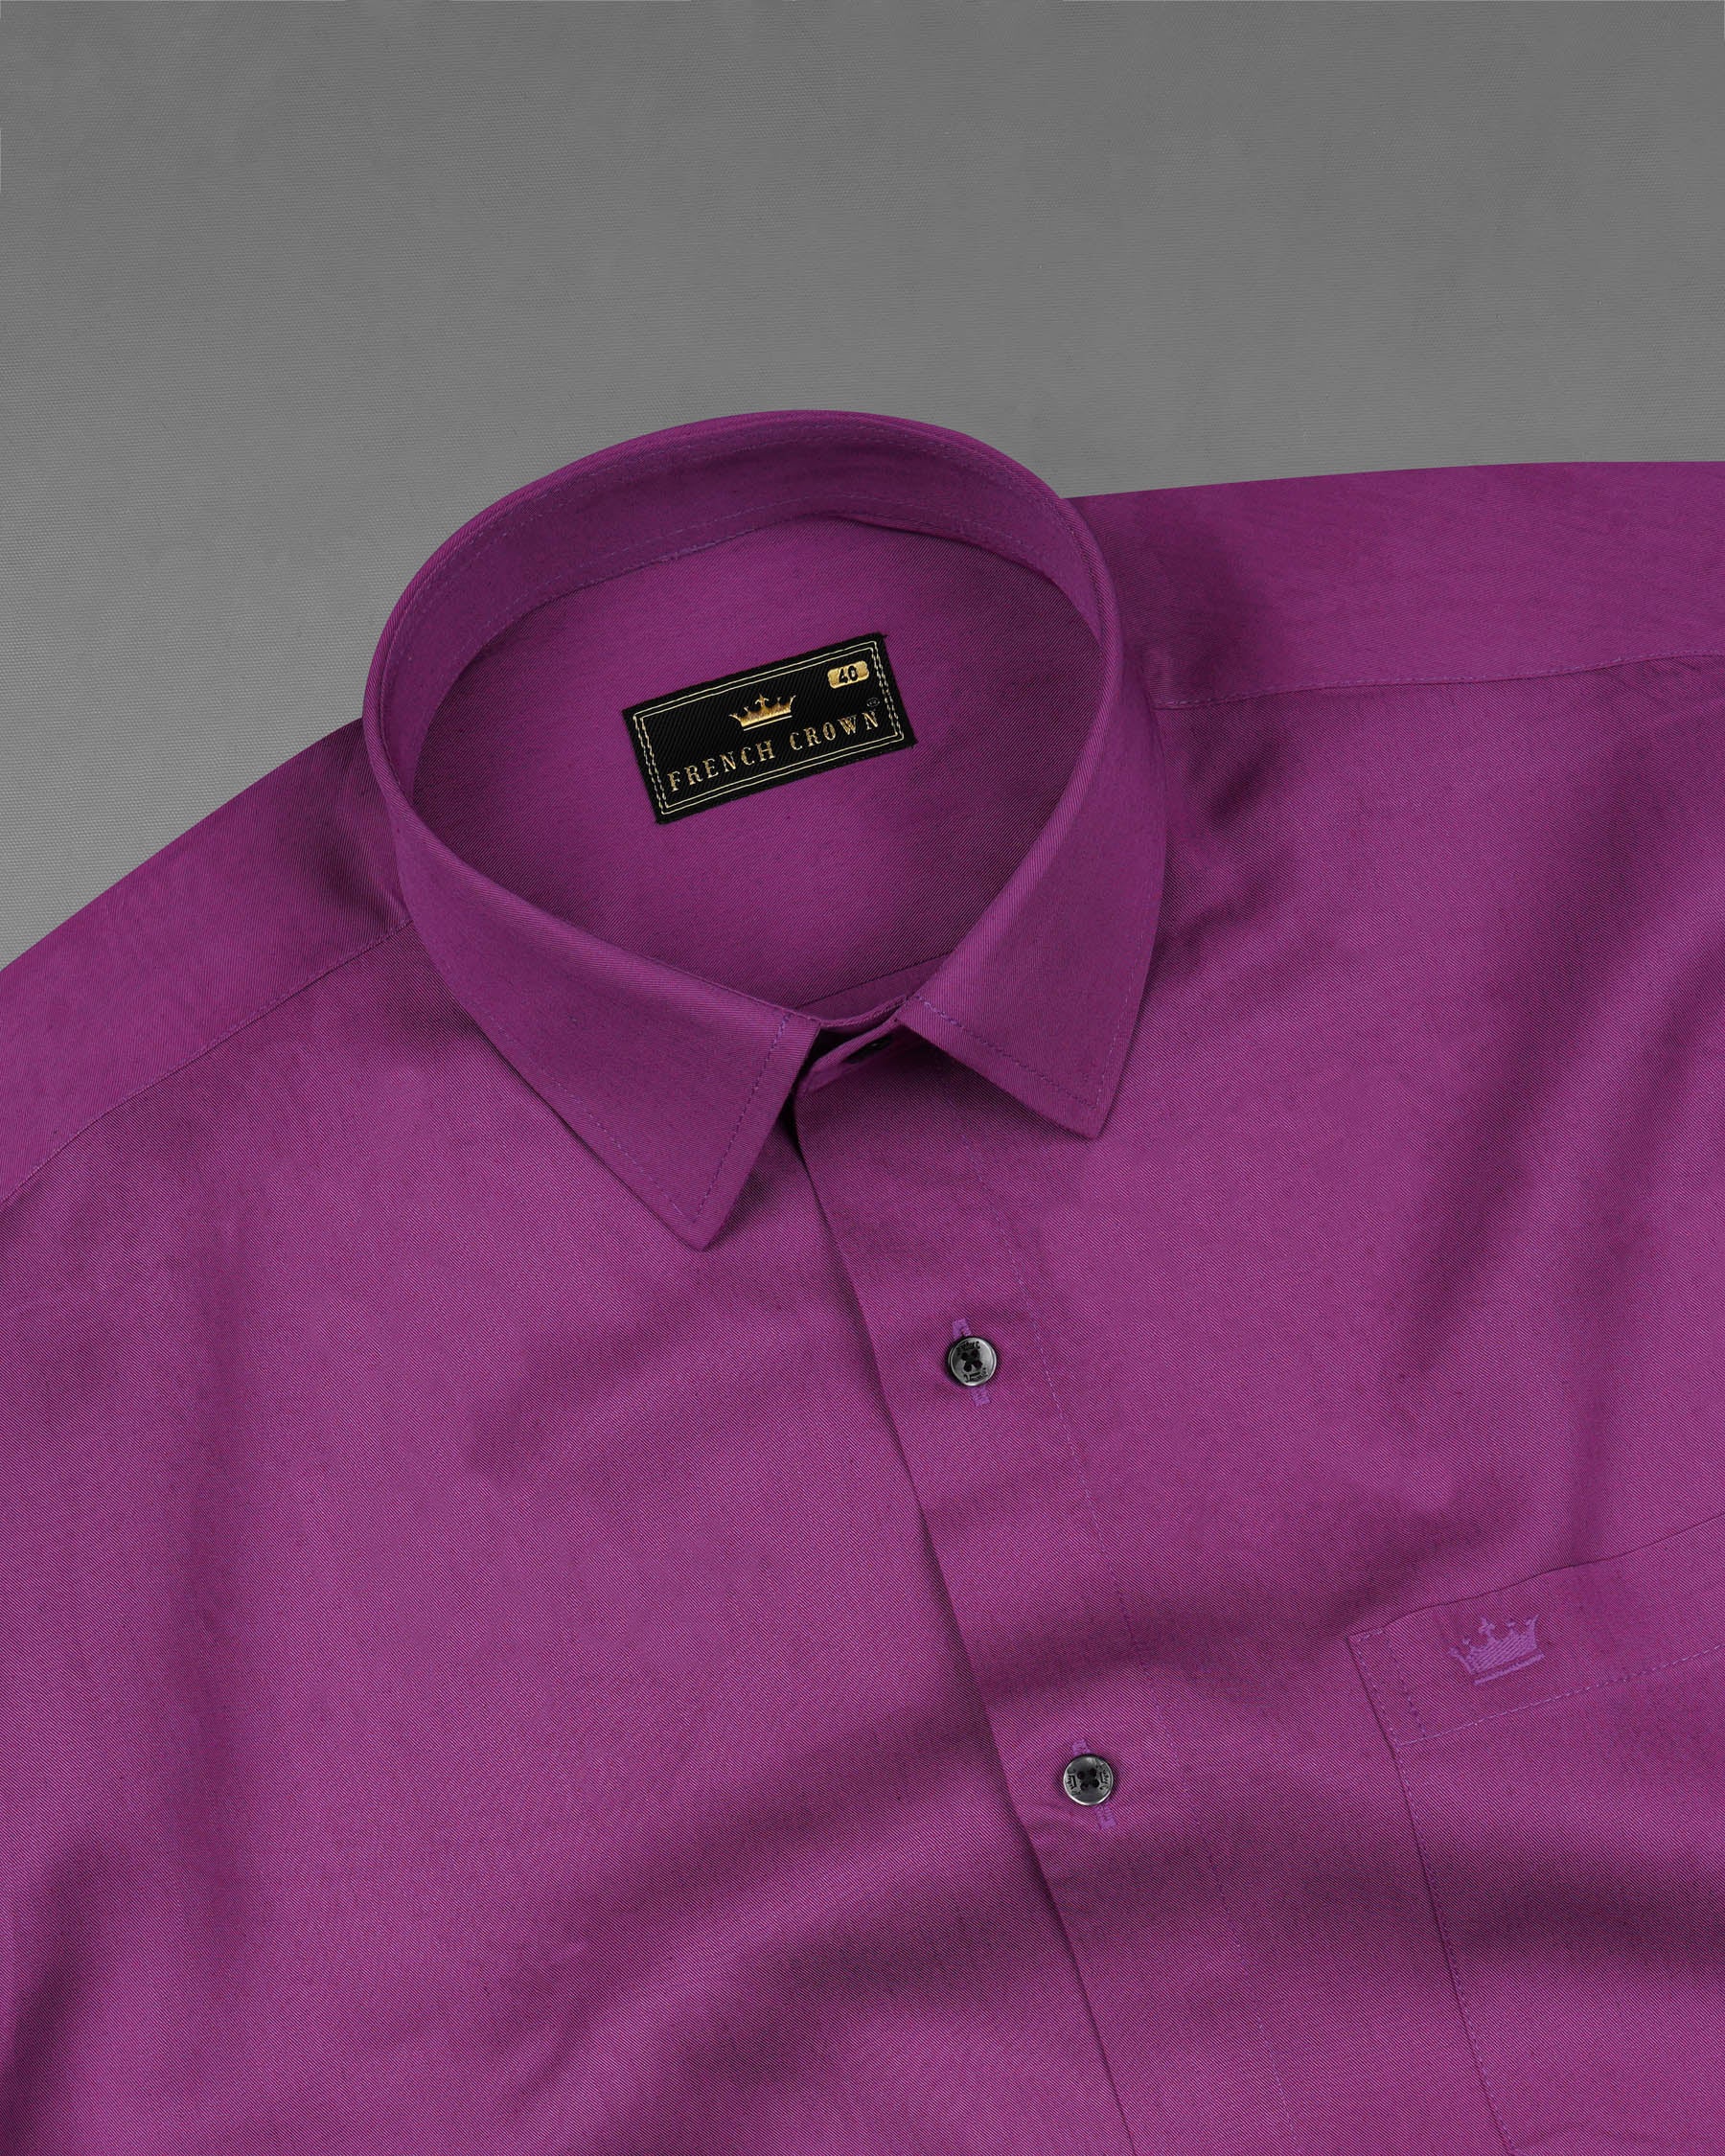 Byzantium Purple Premium Cotton shirt 7970-BLK-38, 7970-BLK-H-38, 7970-BLK-39, 7970-BLK-H-39, 7970-BLK-40, 7970-BLK-H-40, 7970-BLK-42, 7970-BLK-H-42, 7970-BLK-44, 7970-BLK-H-44, 7970-BLK-46, 7970-BLK-H-46, 7970-BLK-48, 7970-BLK-H-48, 7970-BLK-50, 7970-BLK-H-50, 7970-BLK-52, 7970-BLK-H-52